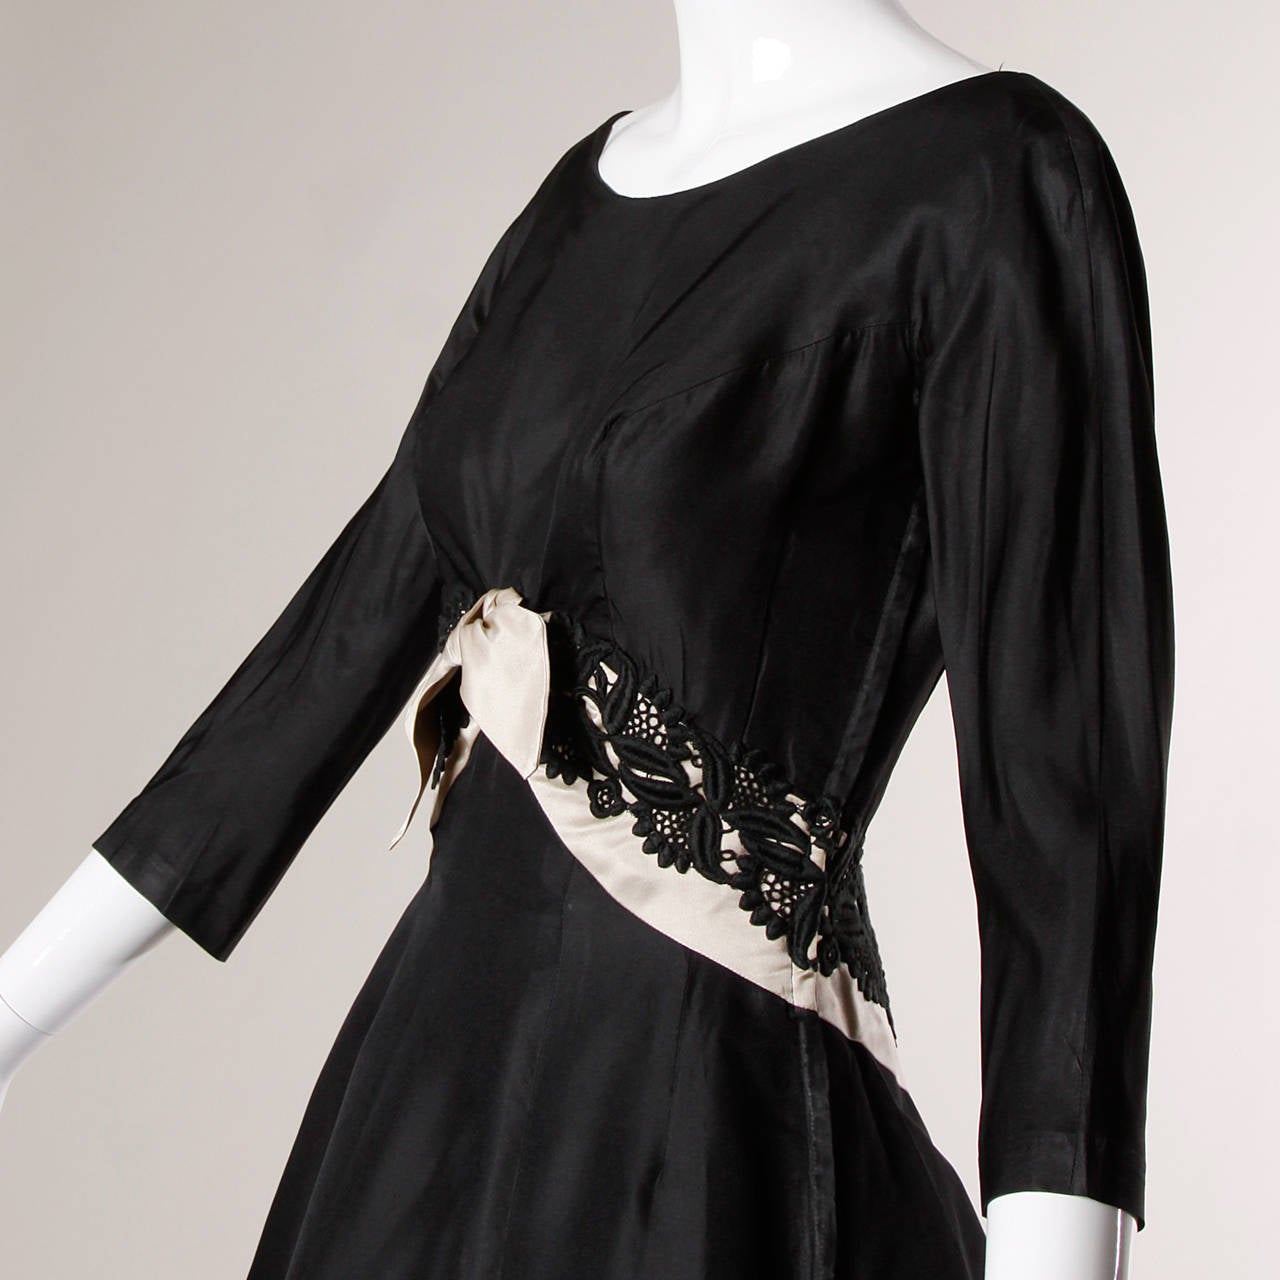 Women's David Hart Vintage 1950s Black Silk Cocktail Dress with Lace Trim